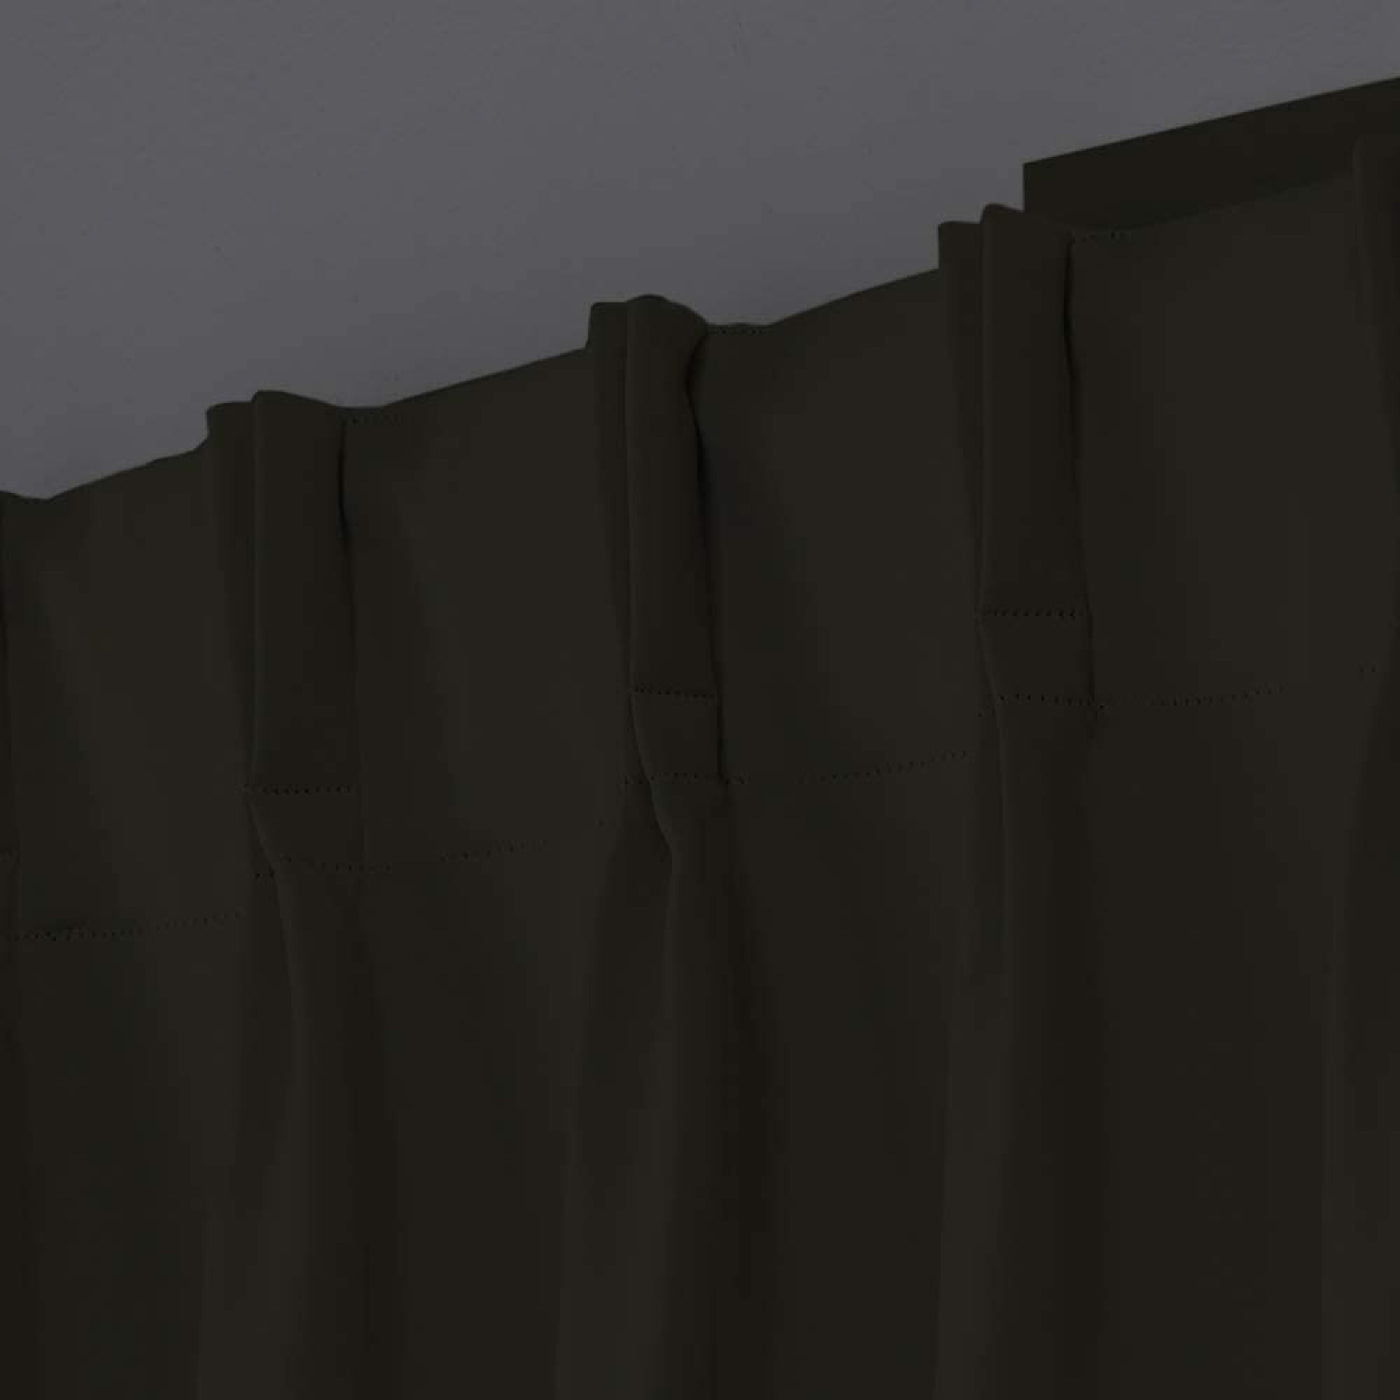 Double Pinch Pleat 100% Blackout Curtains 1 Panel - Dark Colors